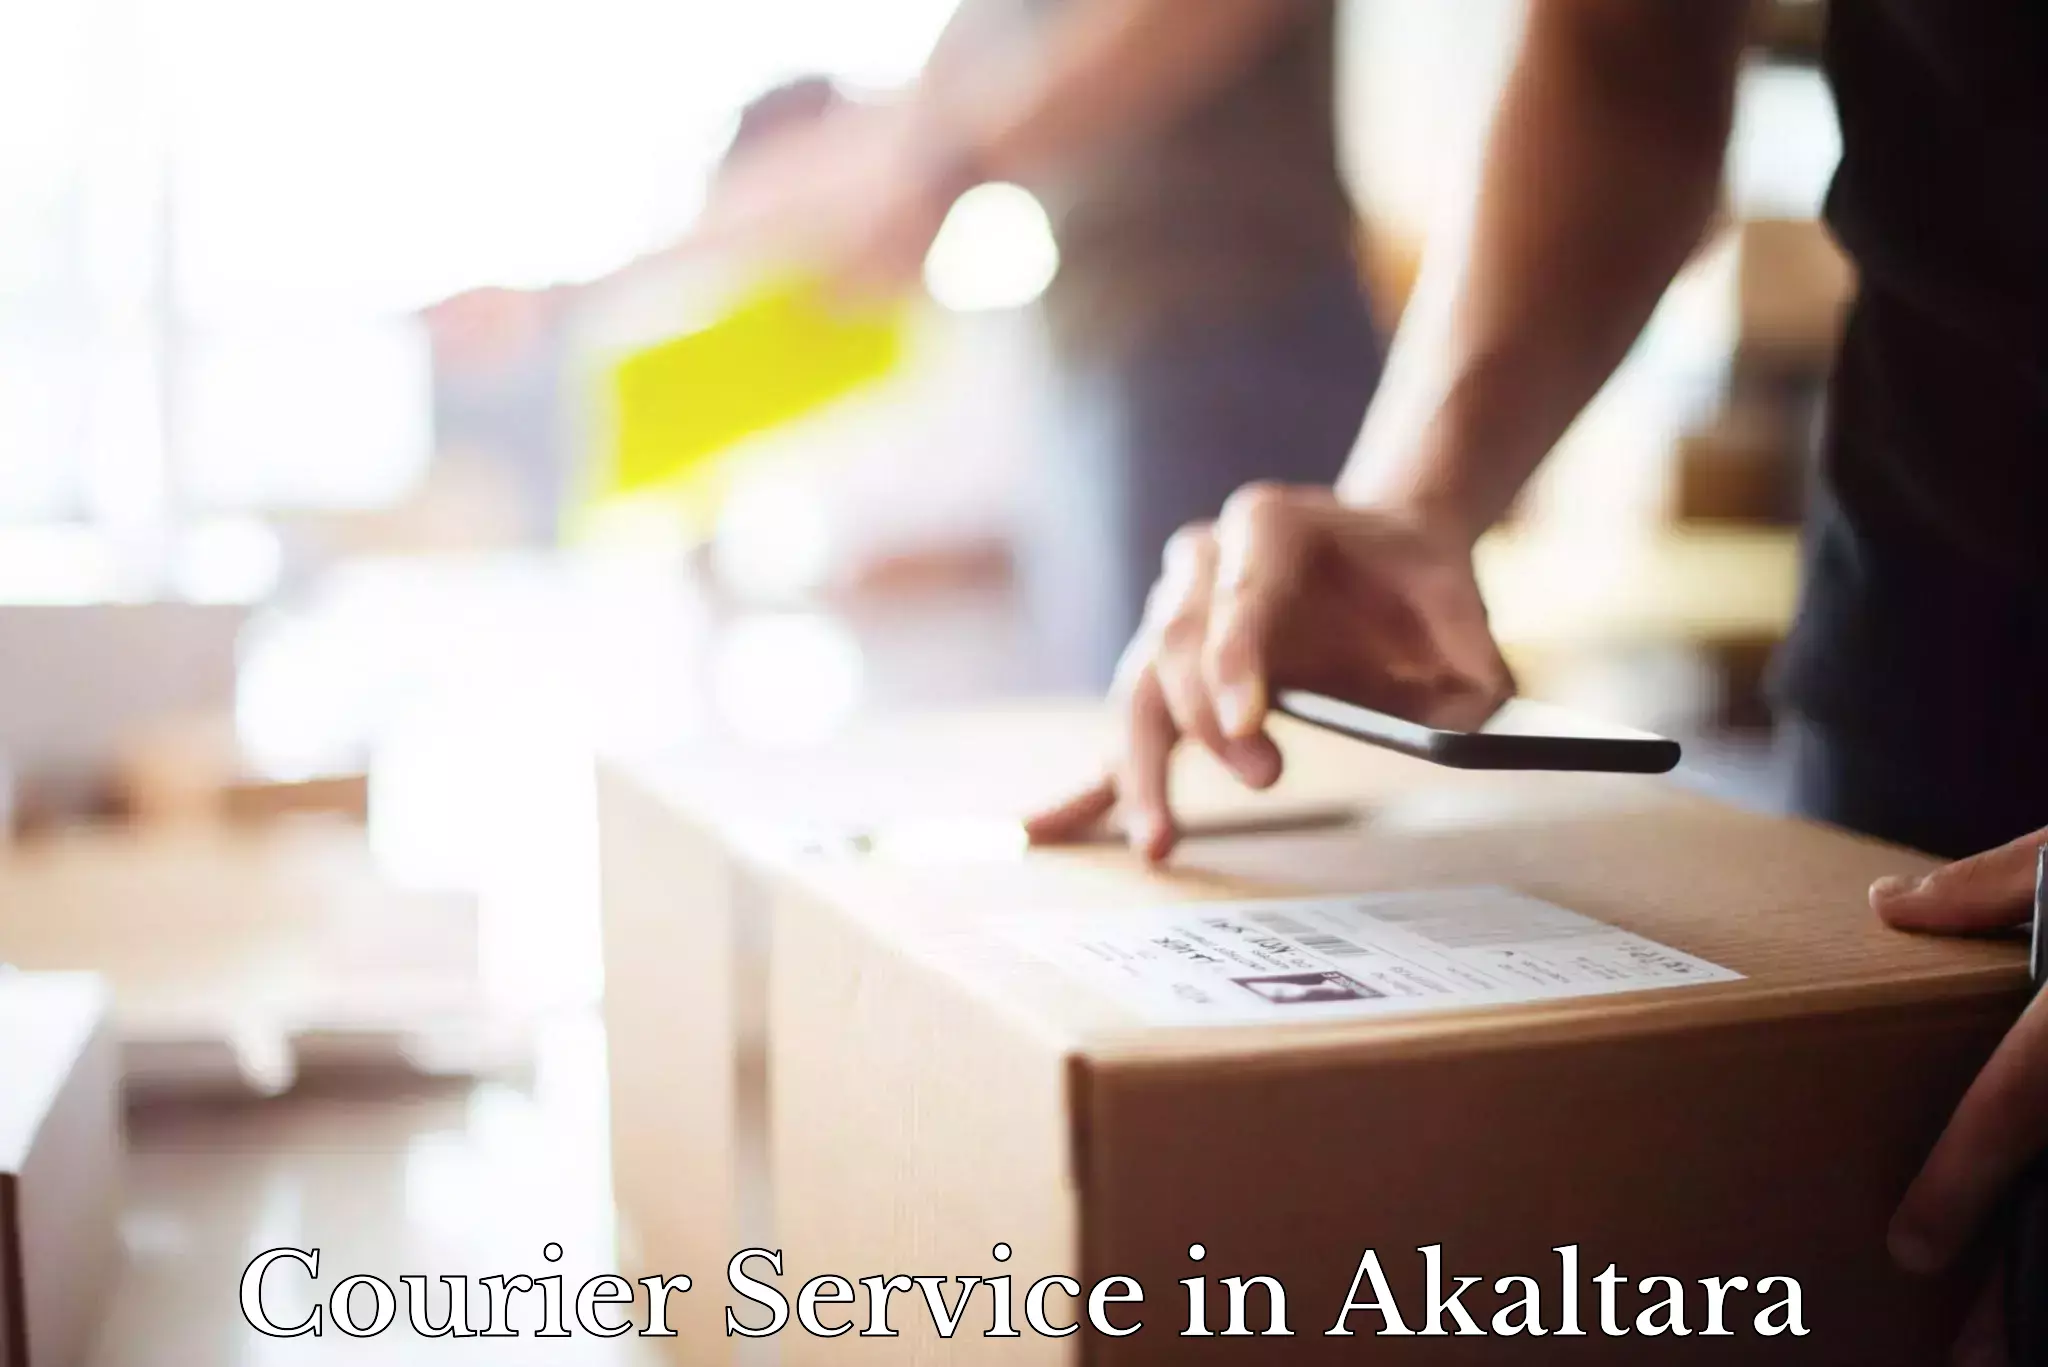 Supply chain efficiency in Akaltara